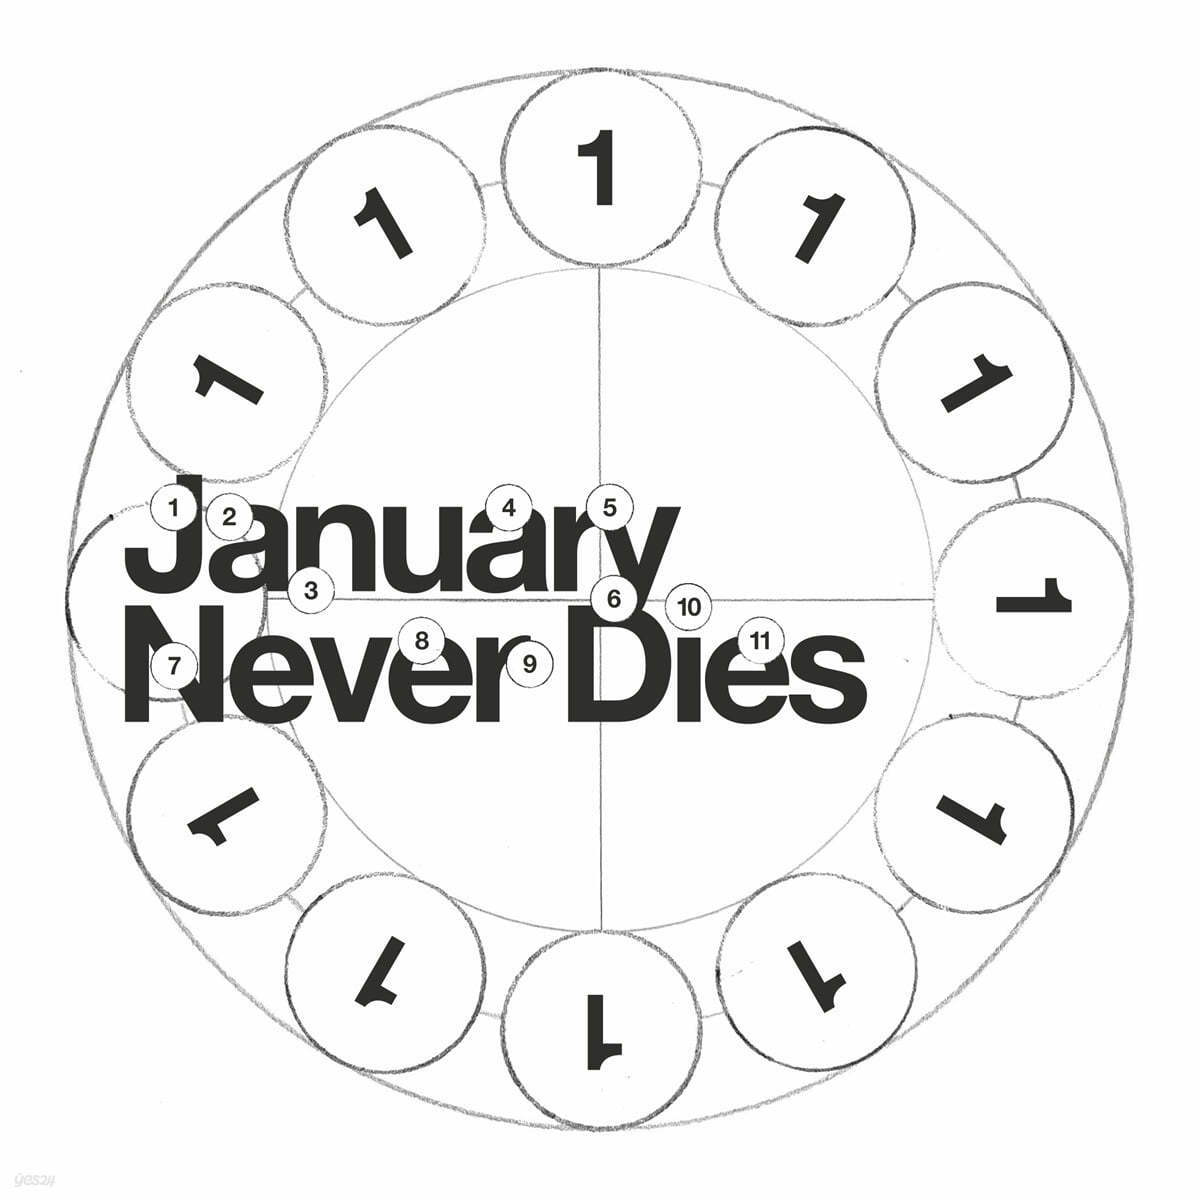 Balming Tiger (바밍 타이거) - January Never Dies